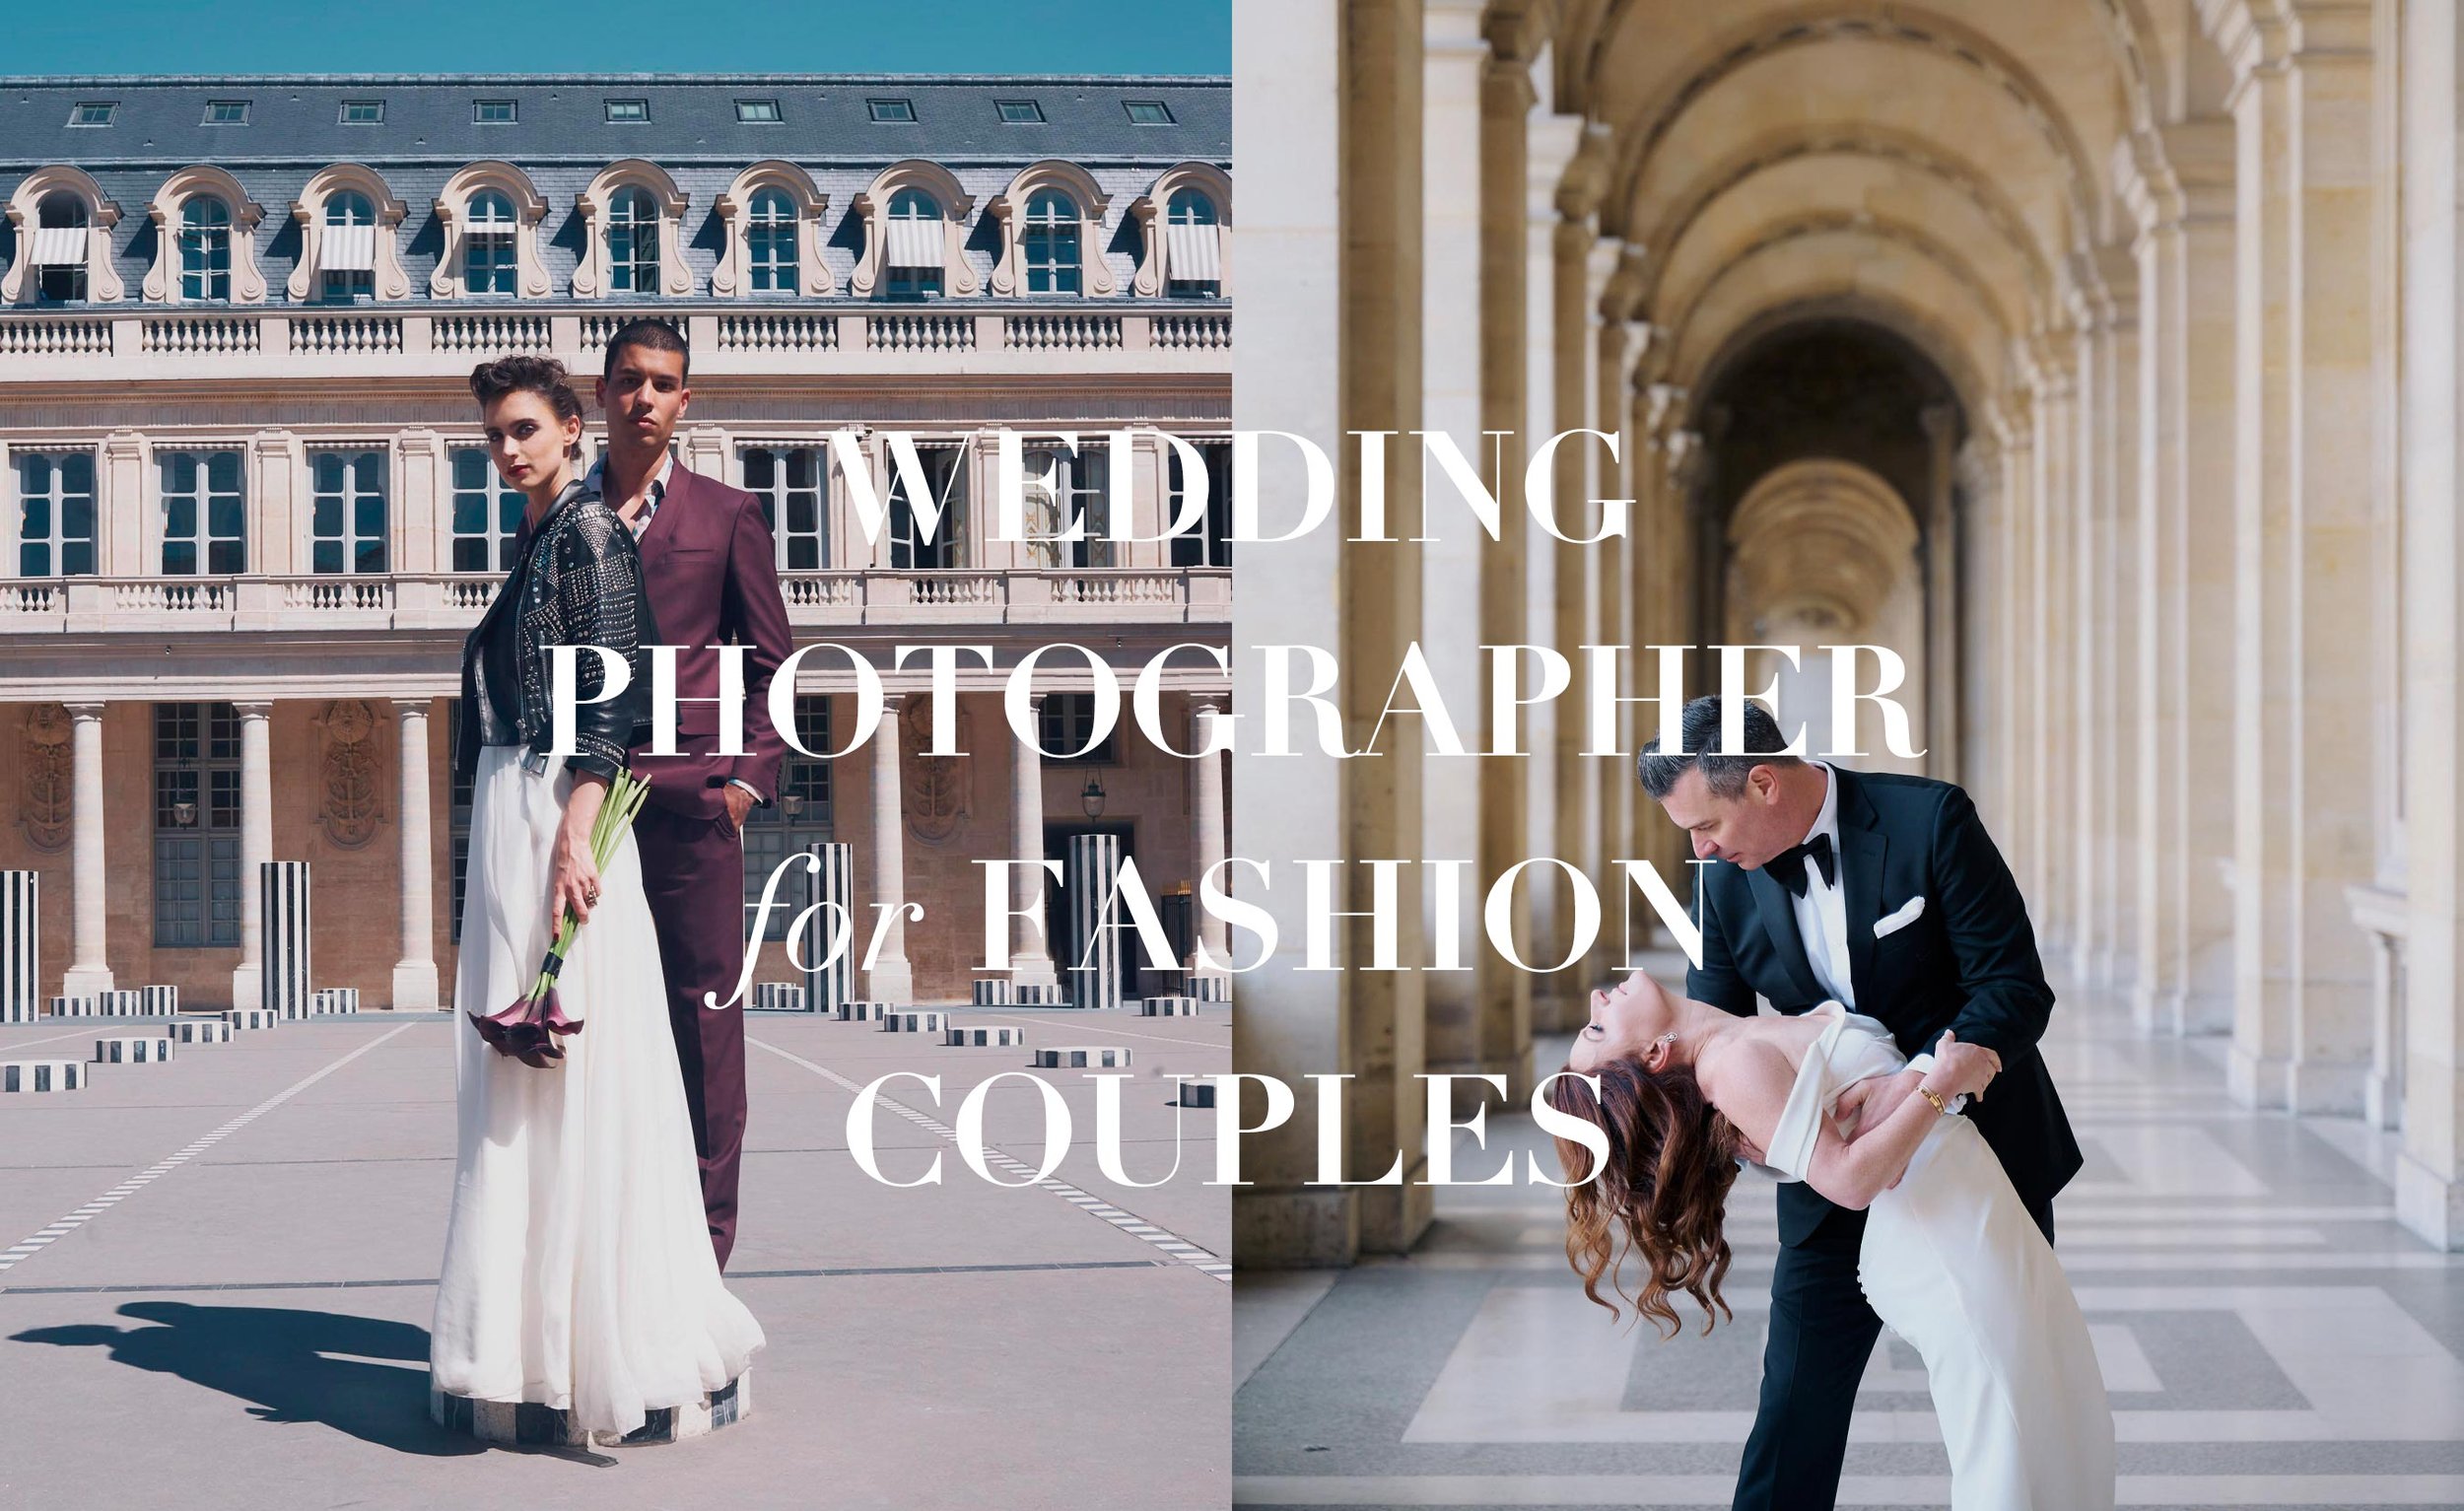 David_picchio_fashion_wedding_photographer_couple_paris_france_elopment_homepage_16a.jpg